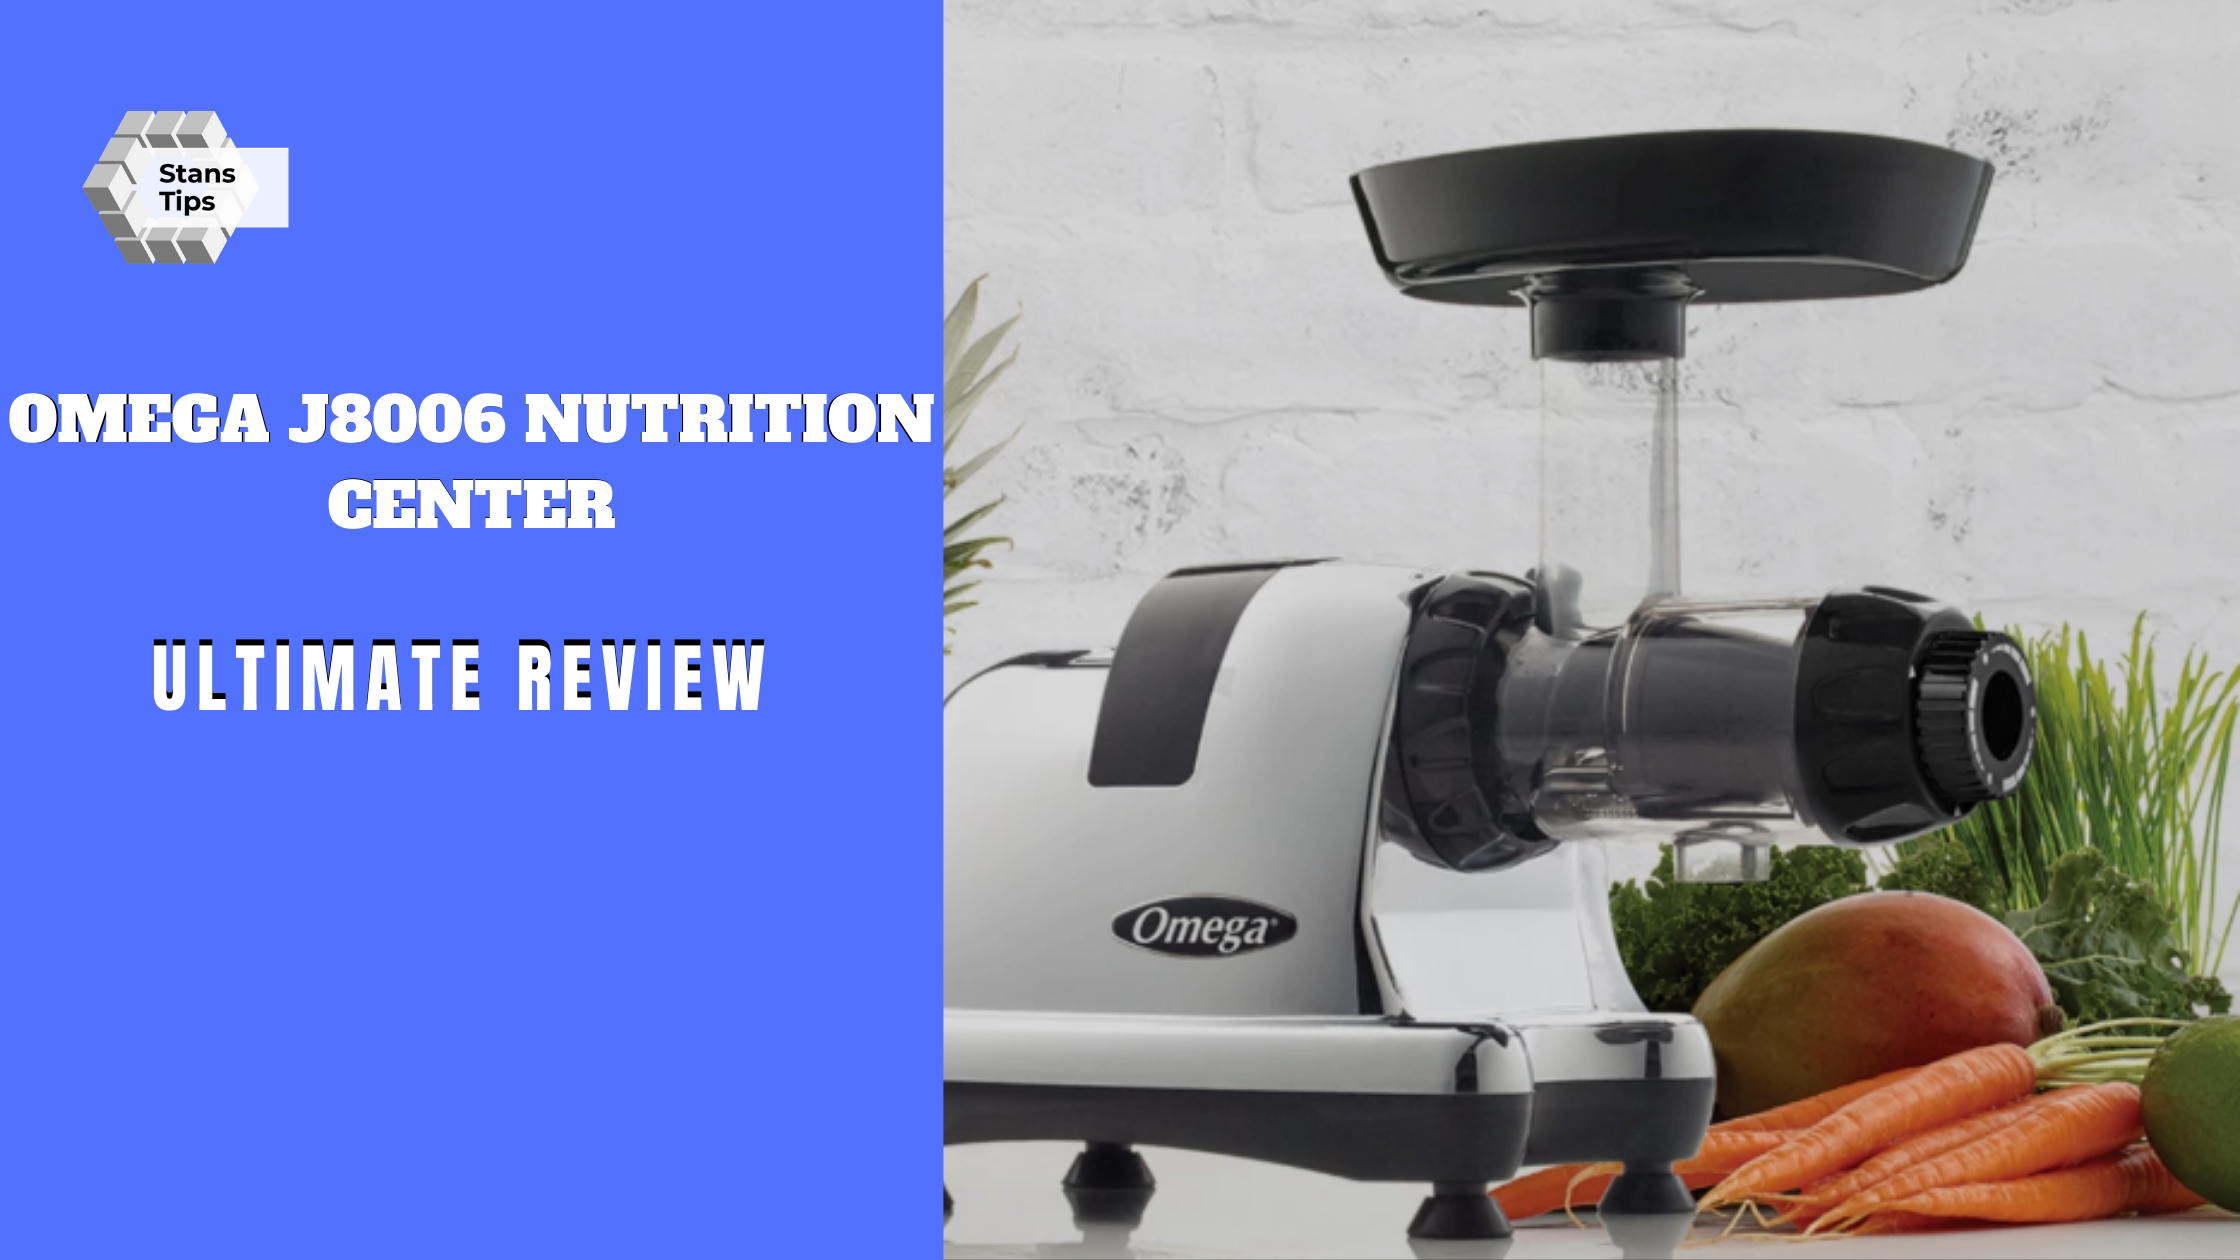 Omega j8006 nutrition center review